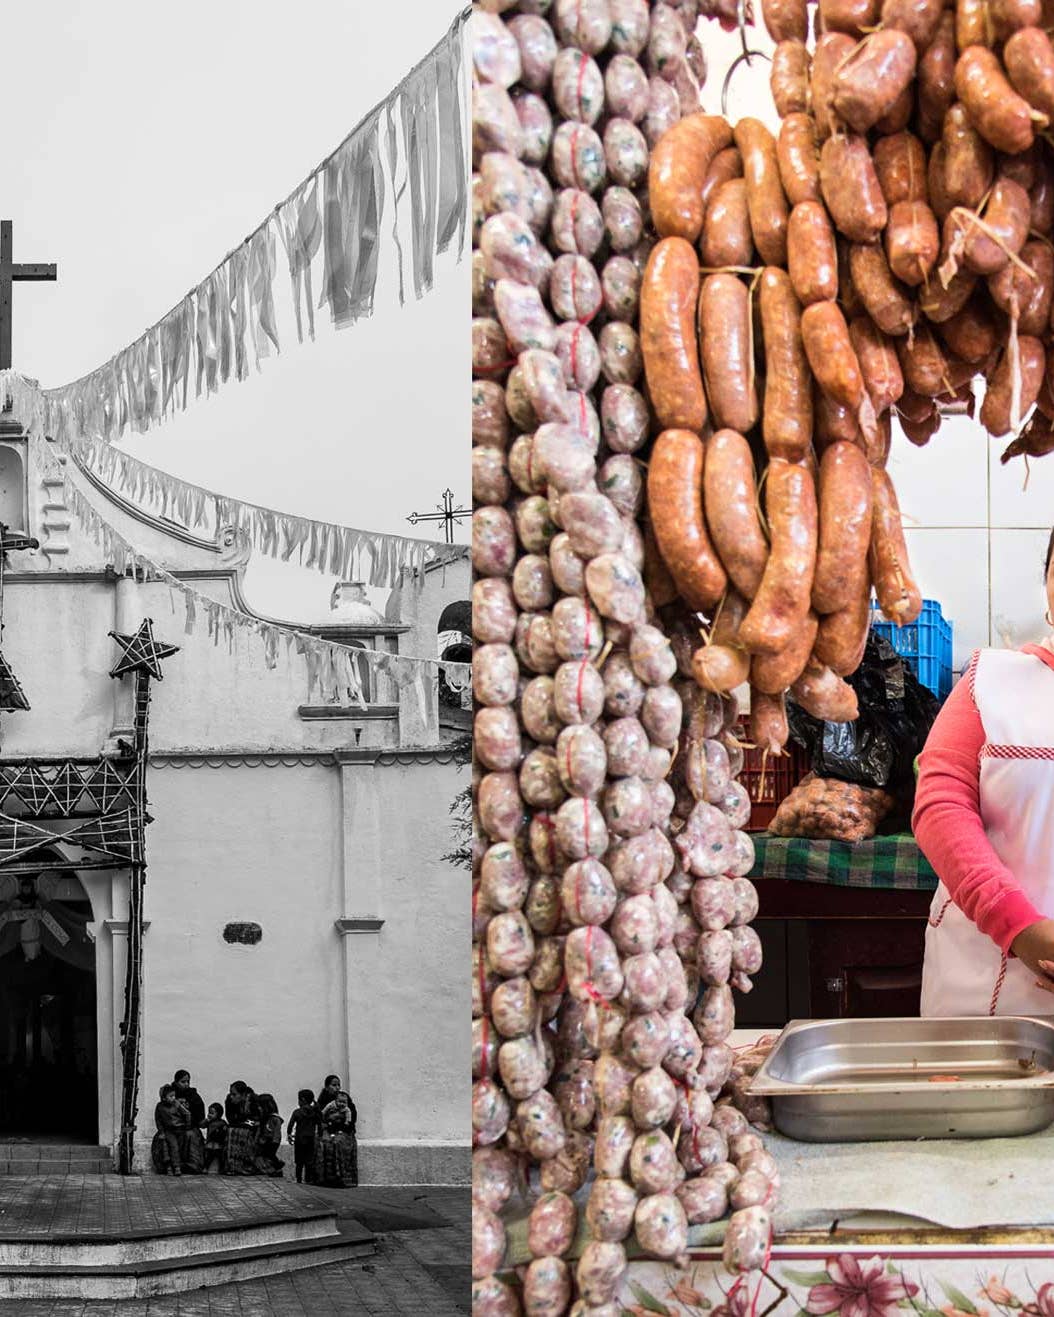 Guatemala’s Ancient Food Traditions